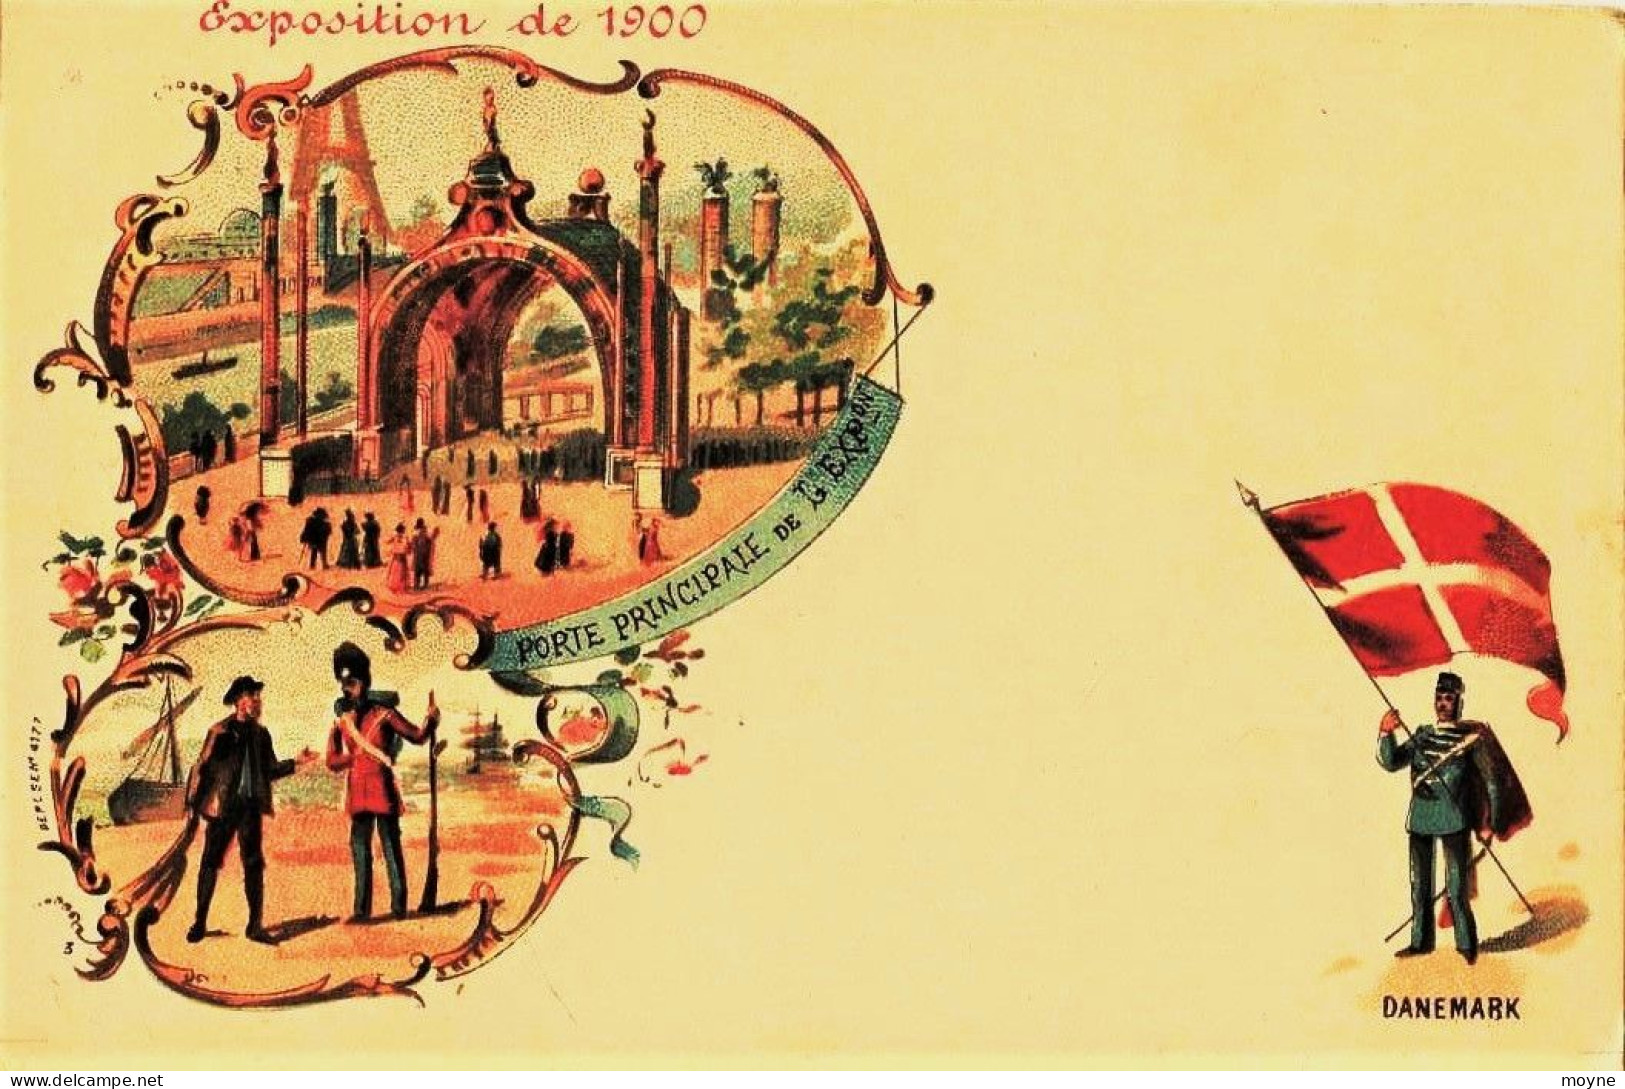 1823 - DANEMARK  -  EXPOSITION 1900 - CHROMO.   PORTE PRINCIPALE -   Illustrateur - Expositions